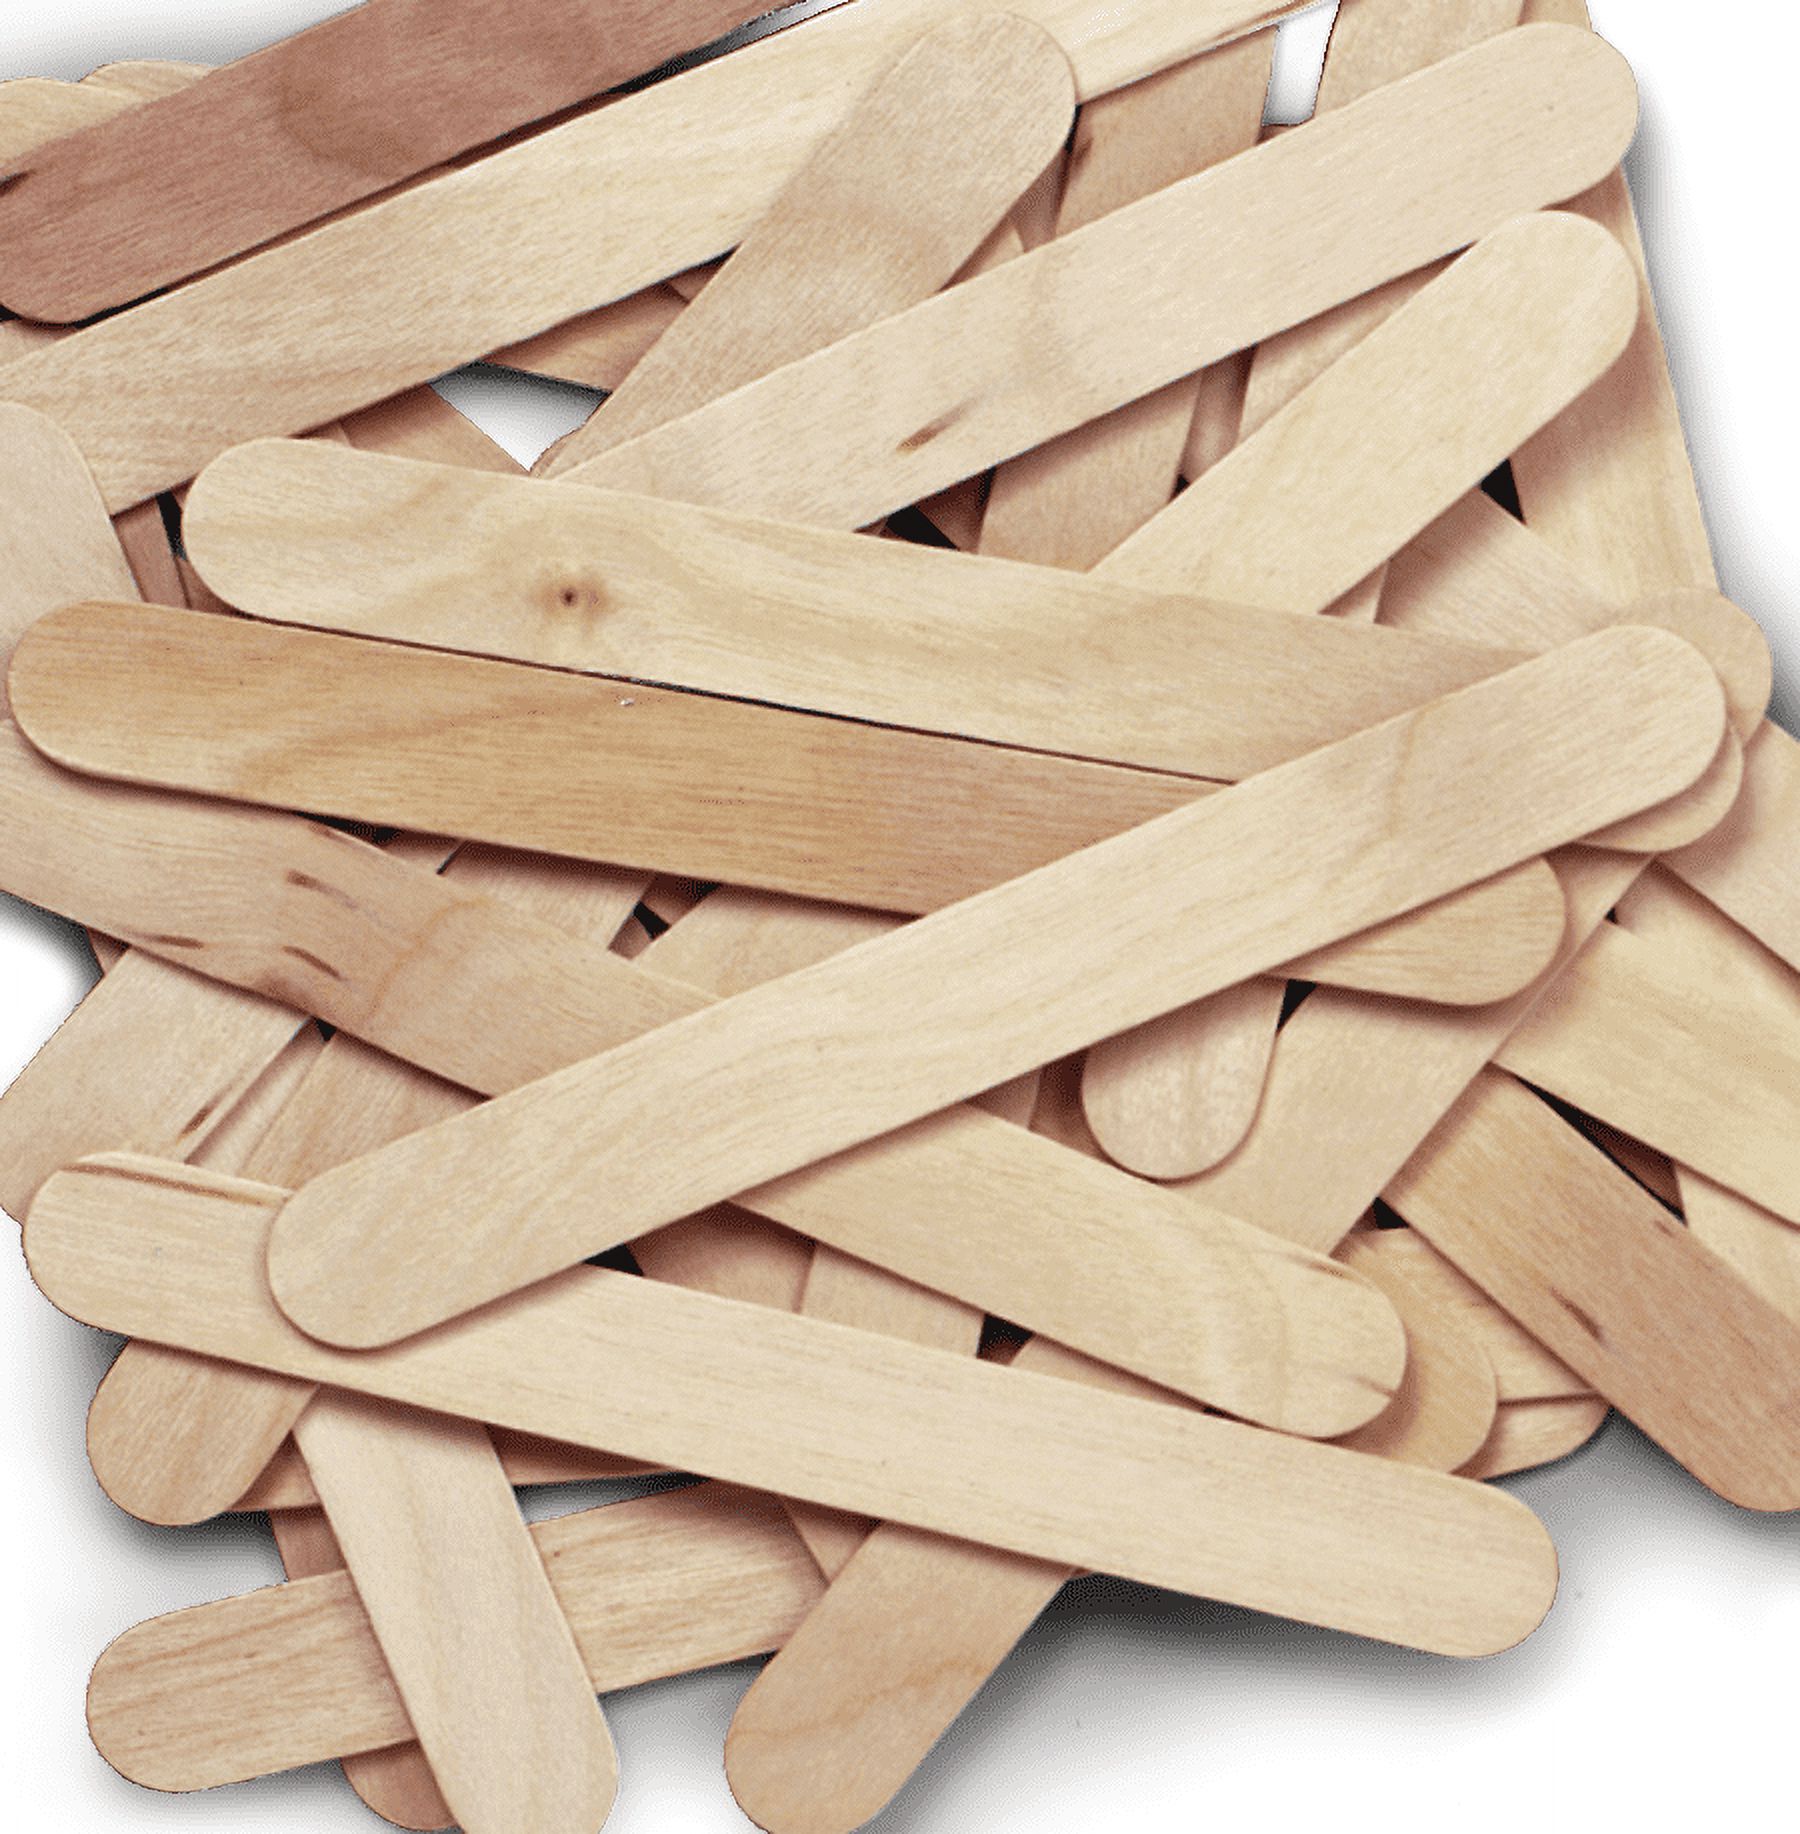 NATURAL WOODEN POPSICLE STICKS Wood Craft Stick School Art; 4.5" x 3/8"; 100 Sticks - image 1 of 3